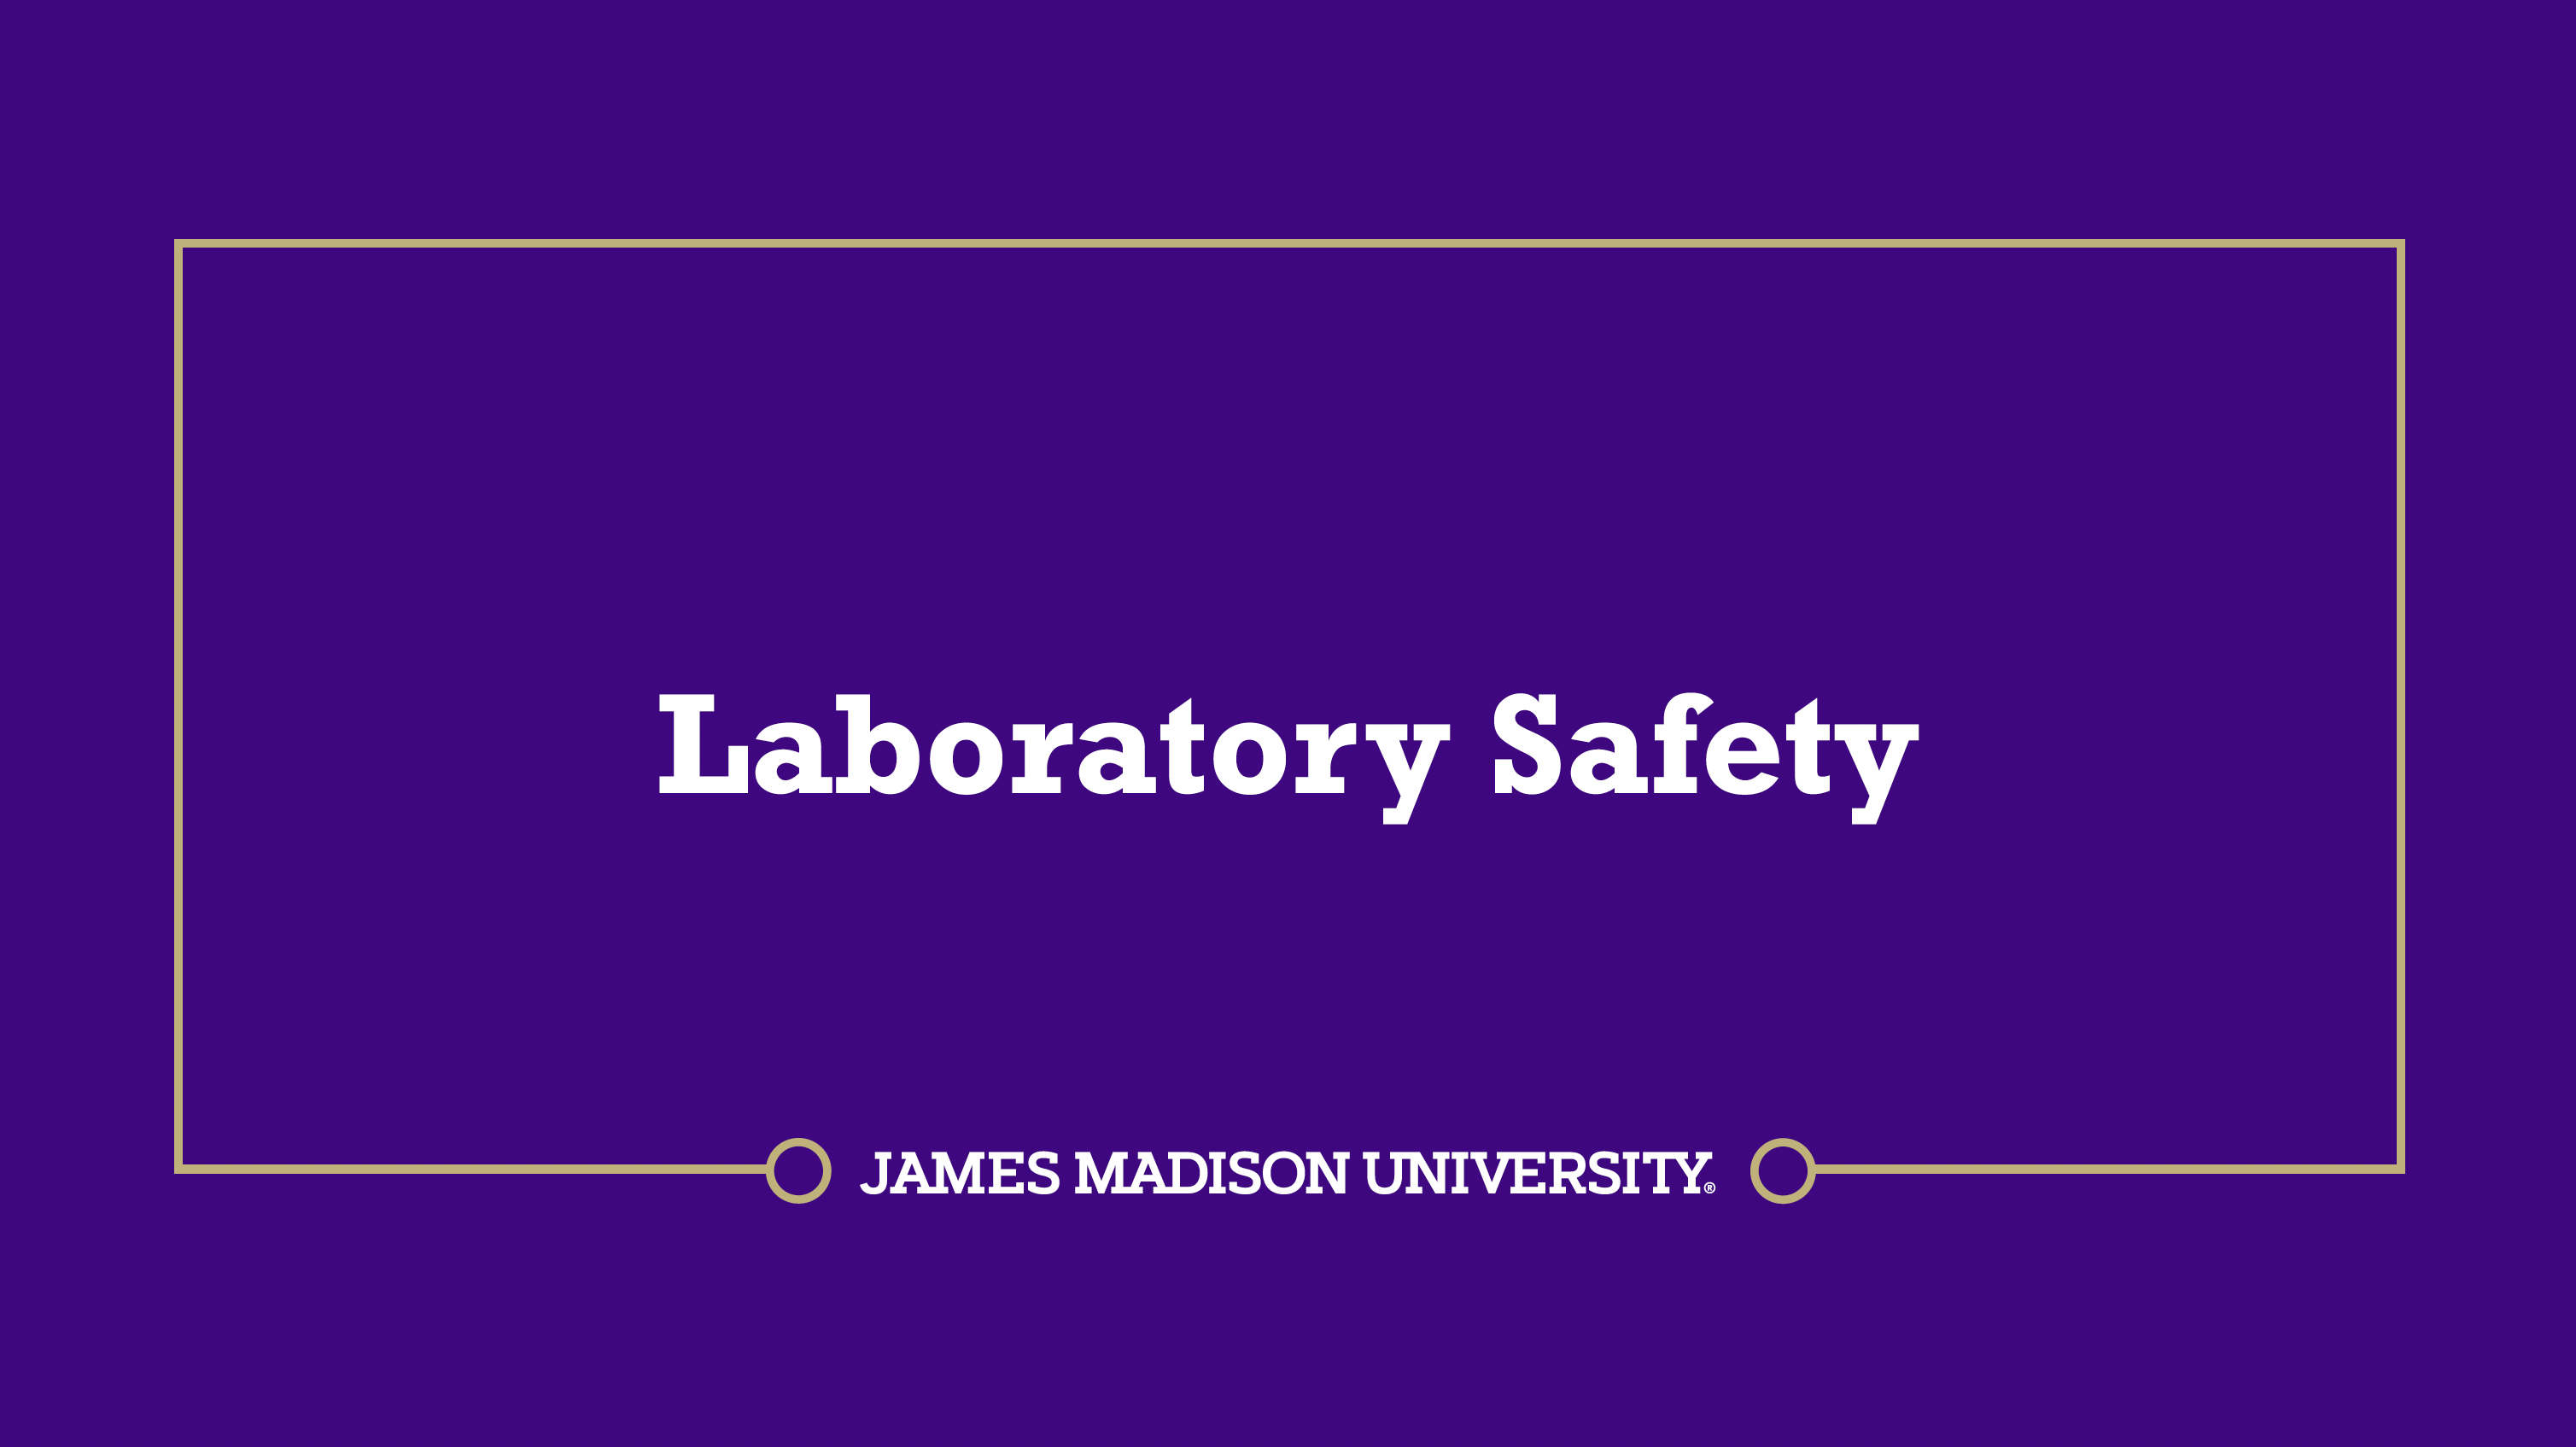 Lab Safety Training